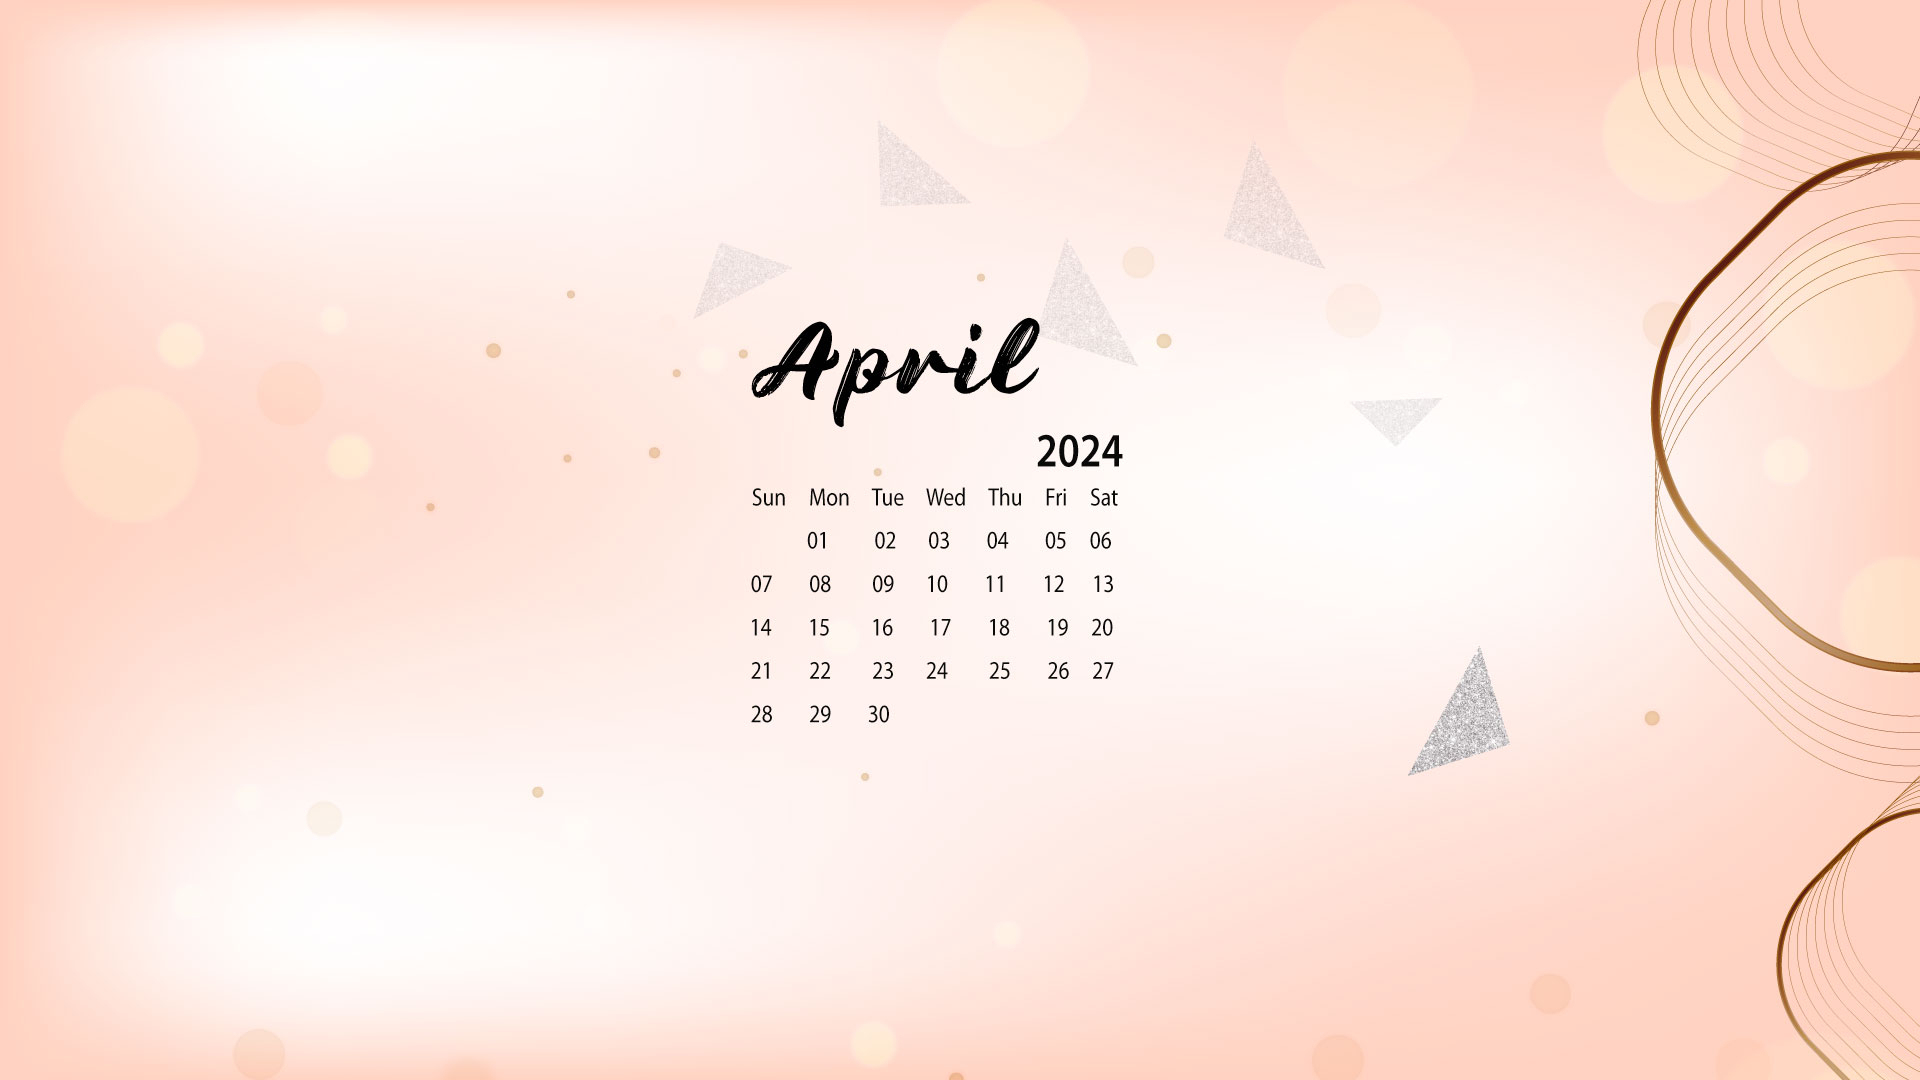 April 2024 Desktop Wallpaper Calendar - Calendarlabs throughout April 2024 Desktop Calendar